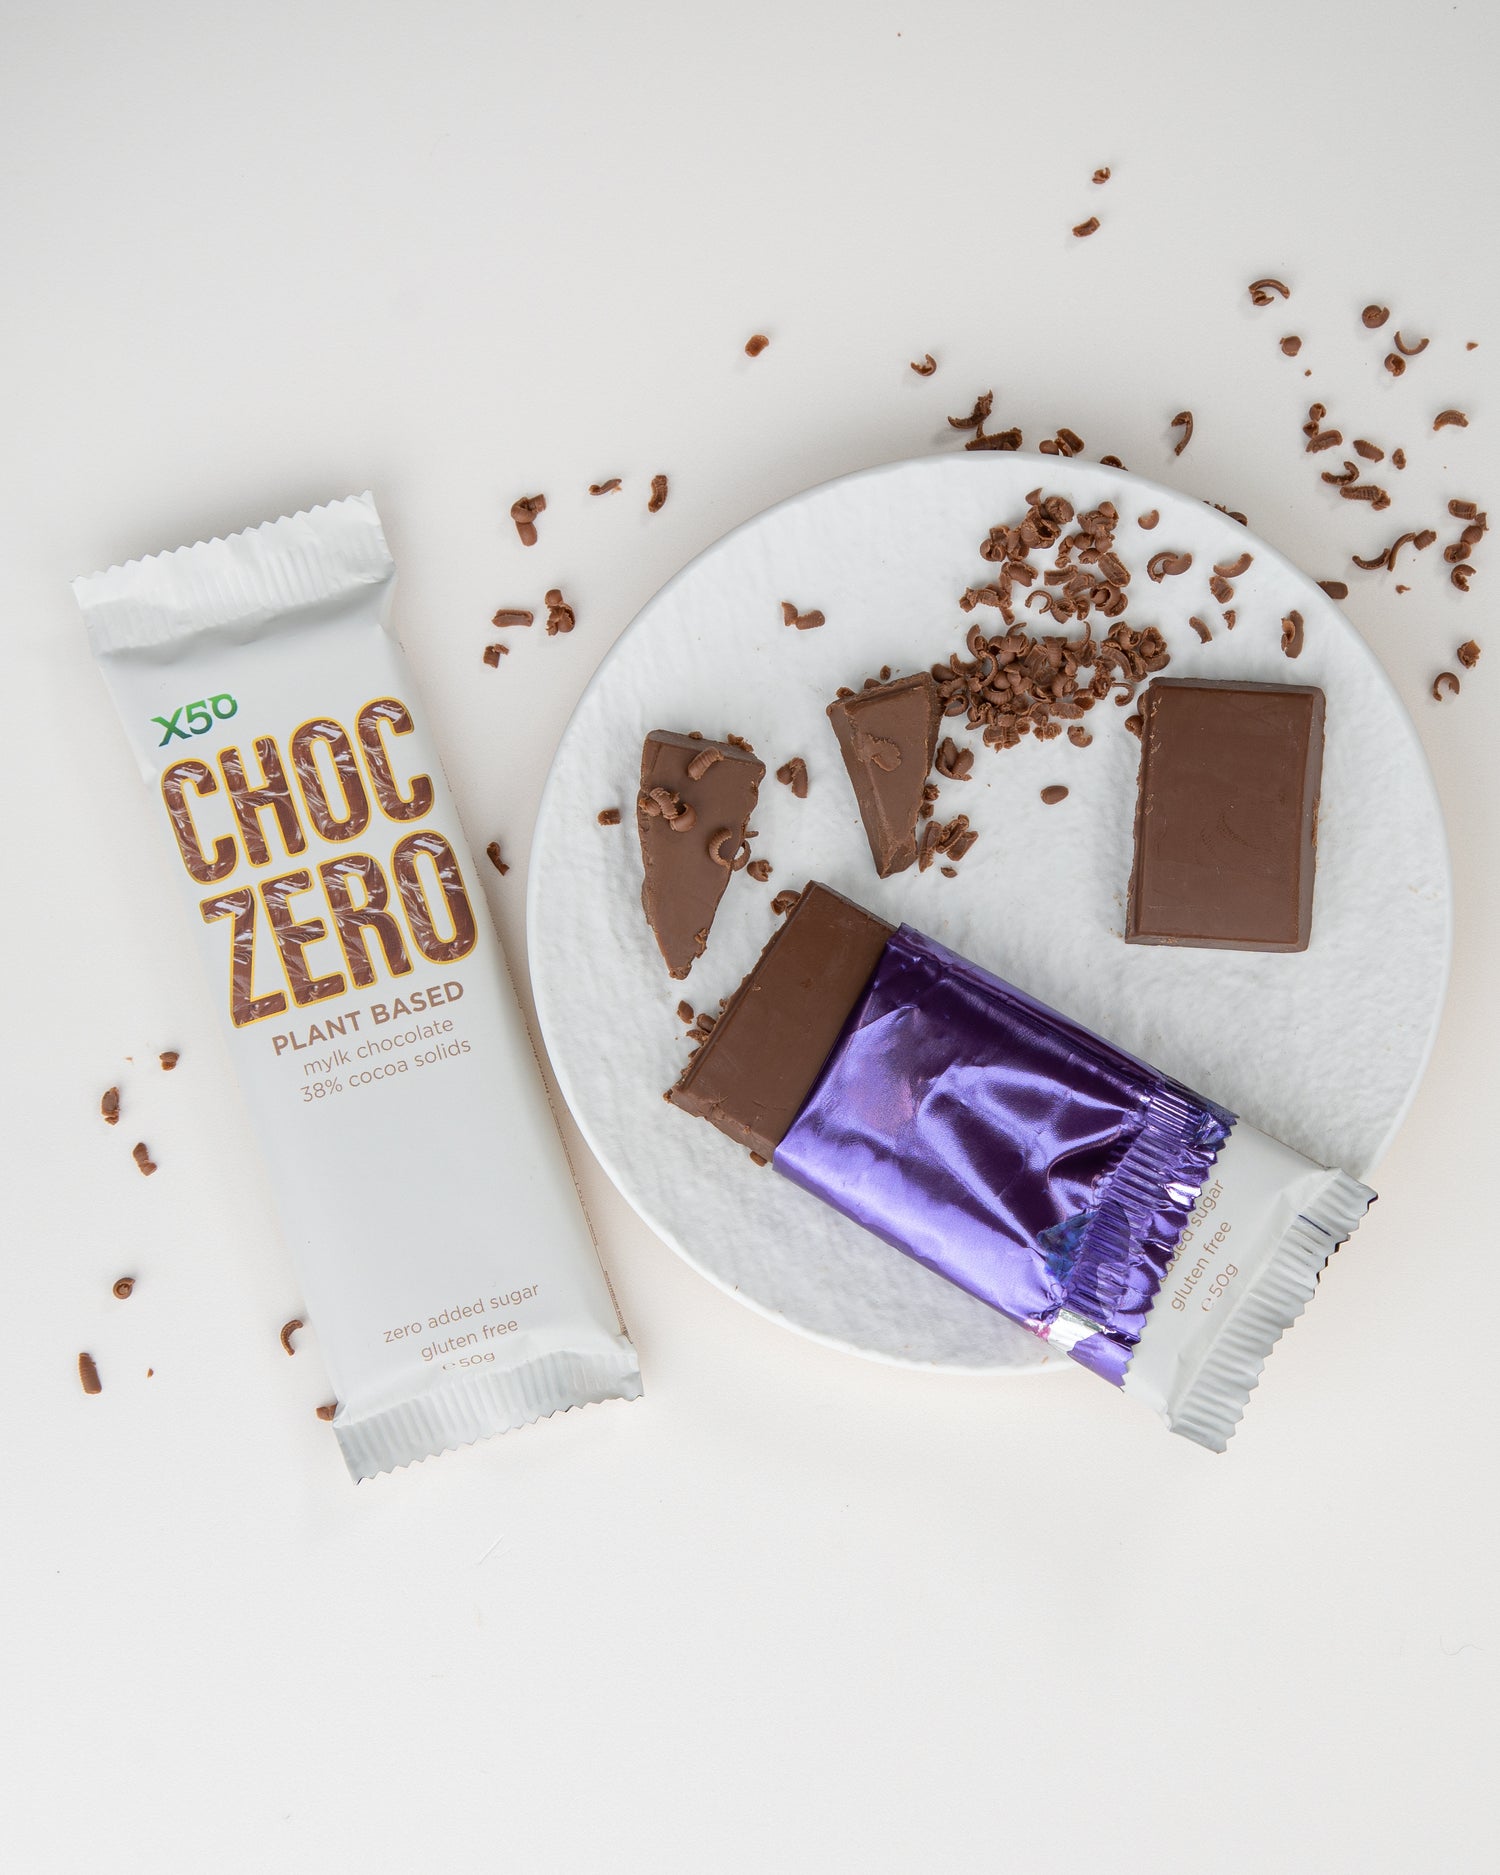 CHOC ZERO - Plant Based chocolate with no added sugar